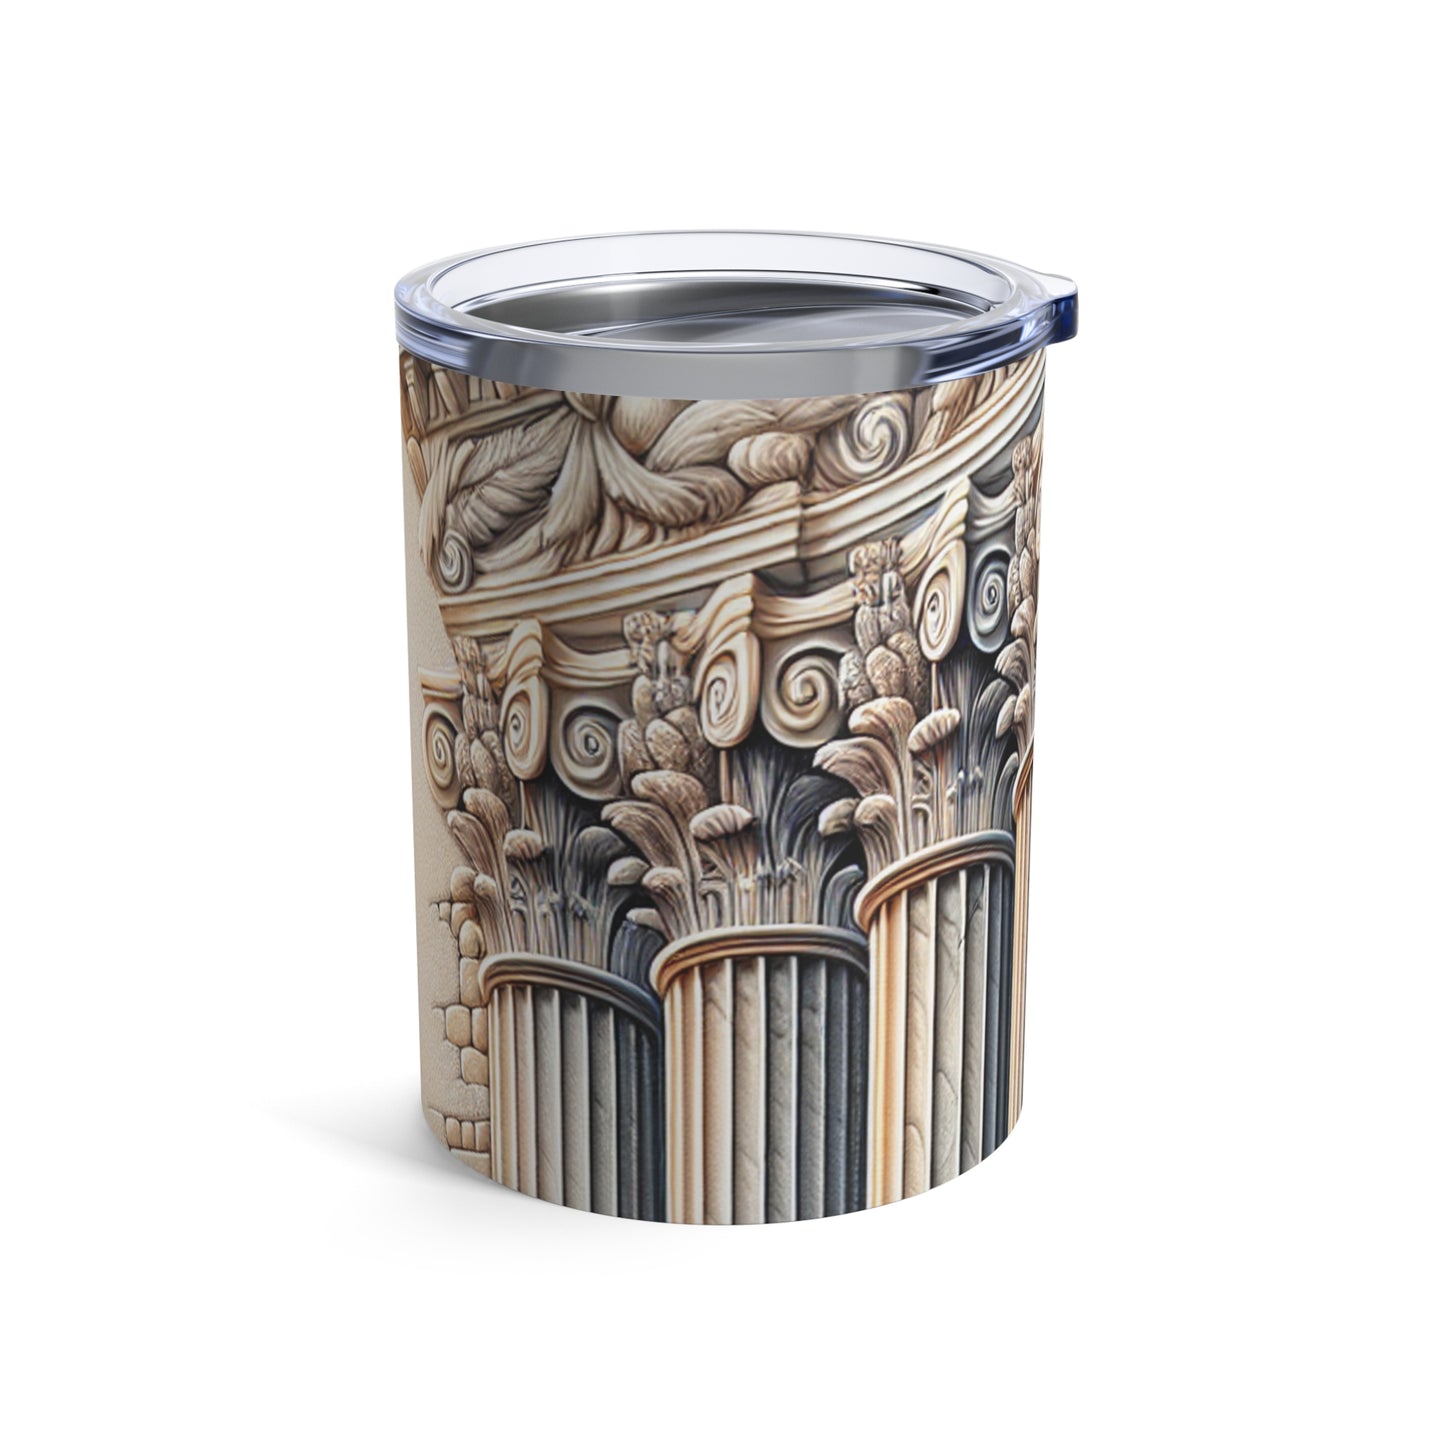 "3D Wall Columns: An Architectural Artpiece" - The Alien Tumbler 10oz Trompe-l'oeil Style